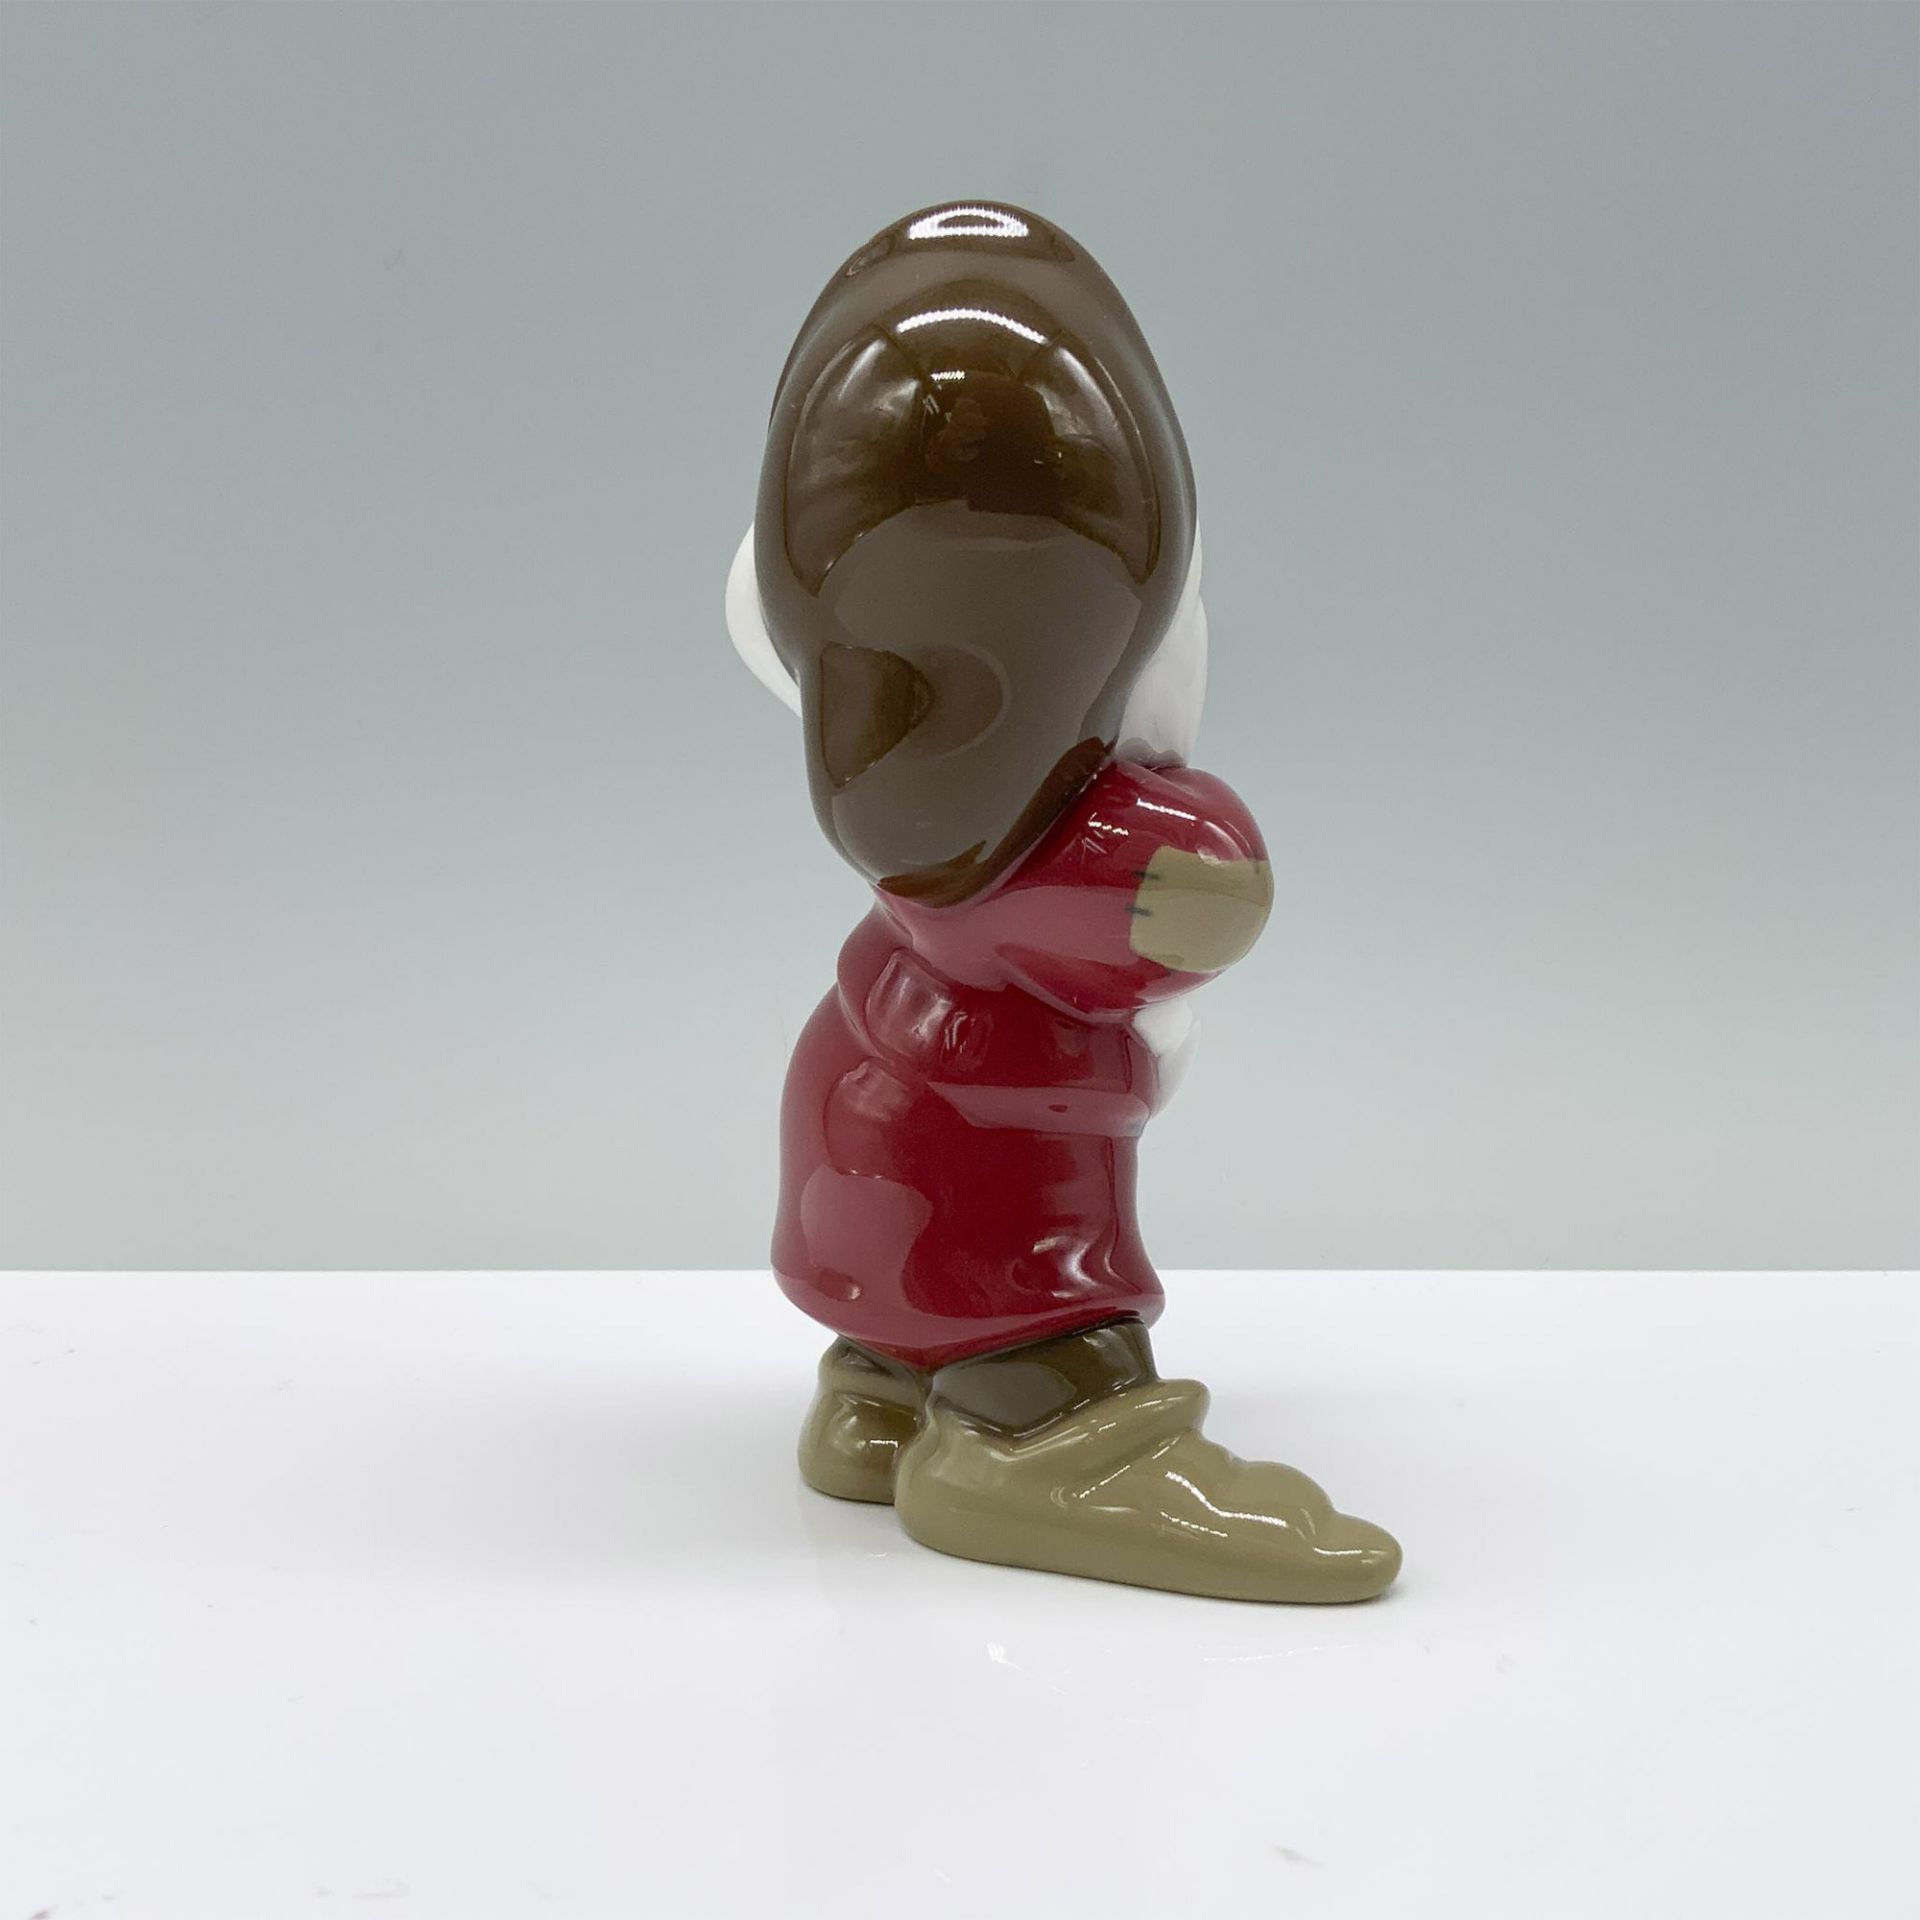 Nao by Lladro Porcelain Disney Figurine, Grumpy - Image 2 of 3